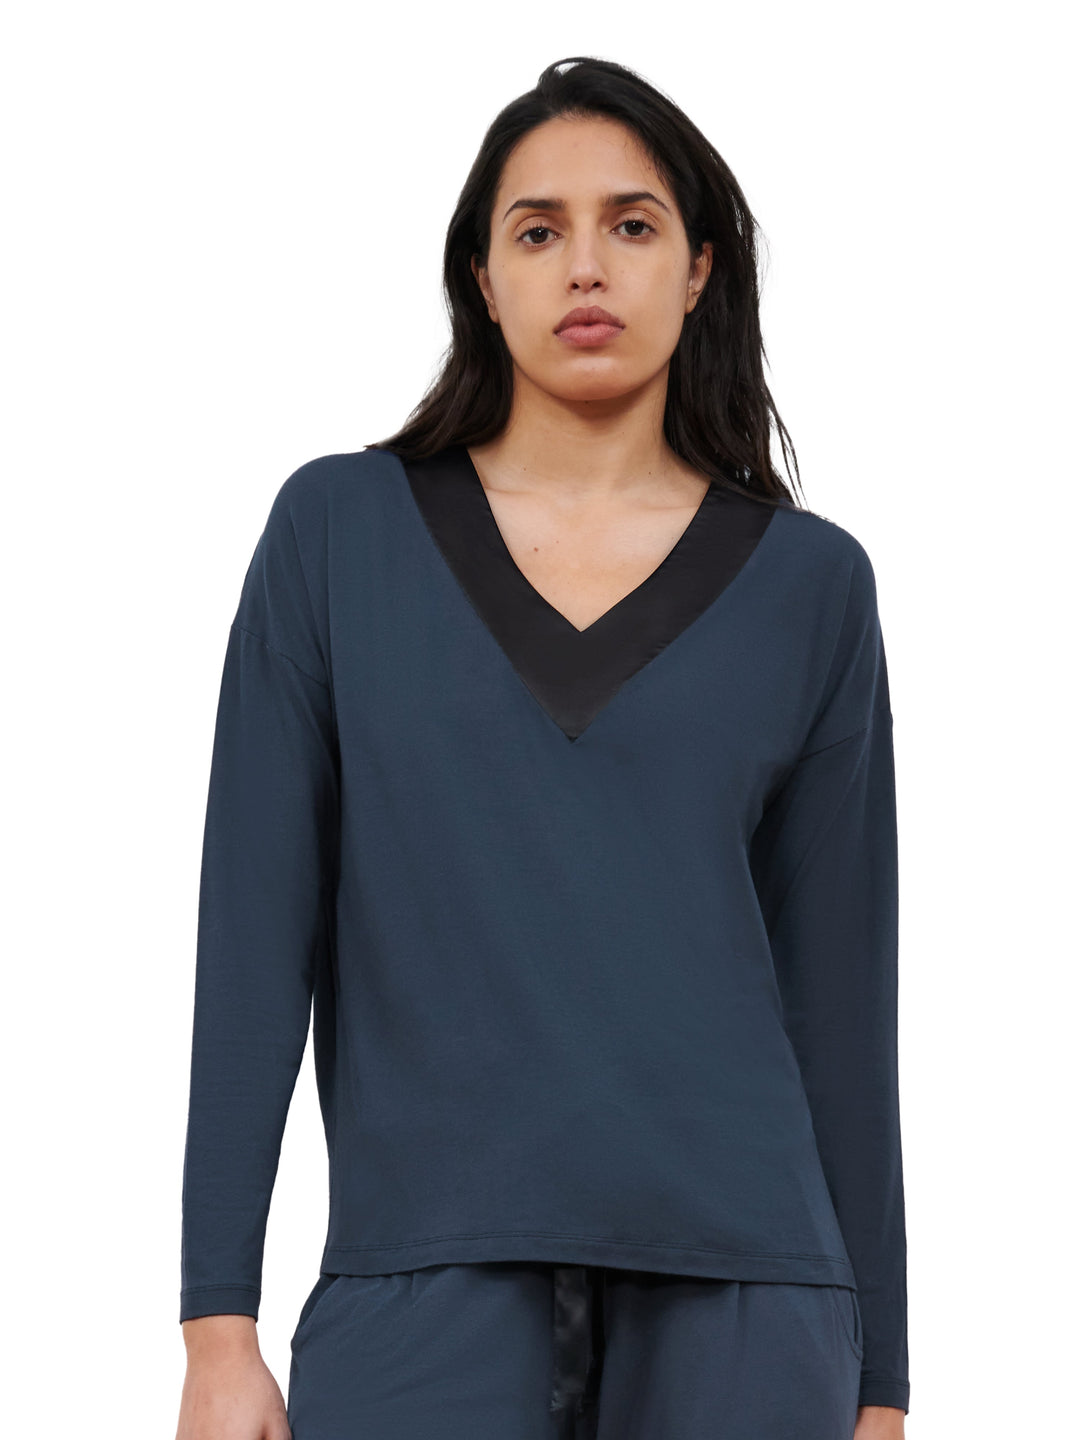 Femilet - Camiseta Lizzy Top de pijama azul marino oscuro Femilet